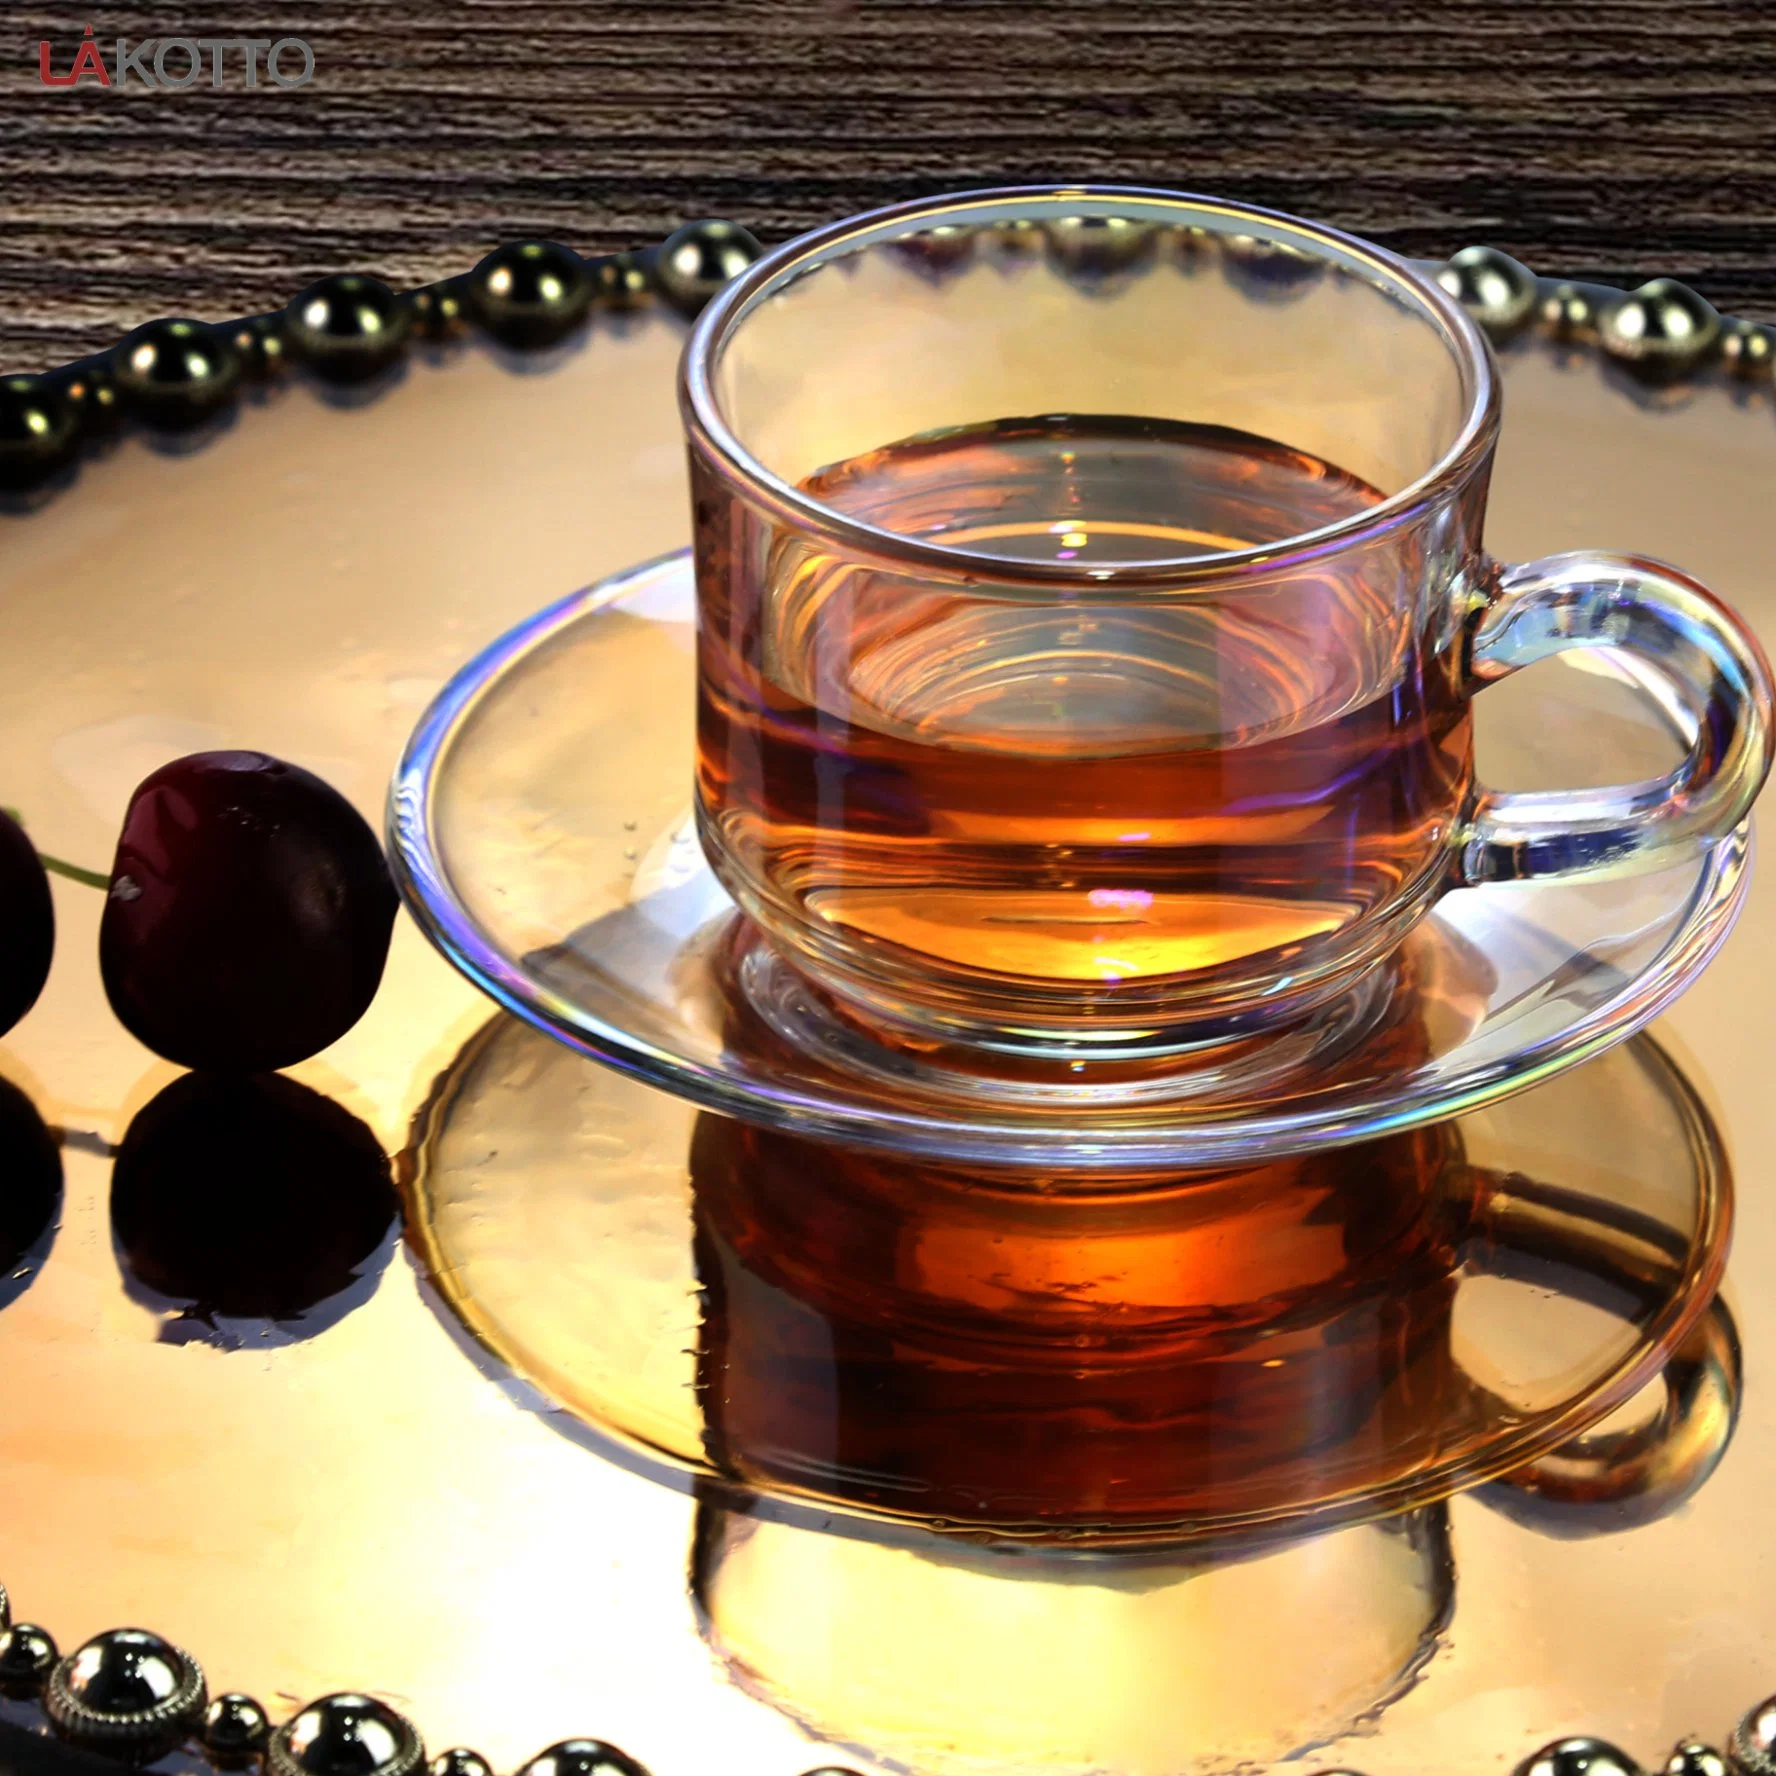 New Lakotto Glass Office Glassware Tea Coffee Tumbler Drinking Glasses Mug Cup